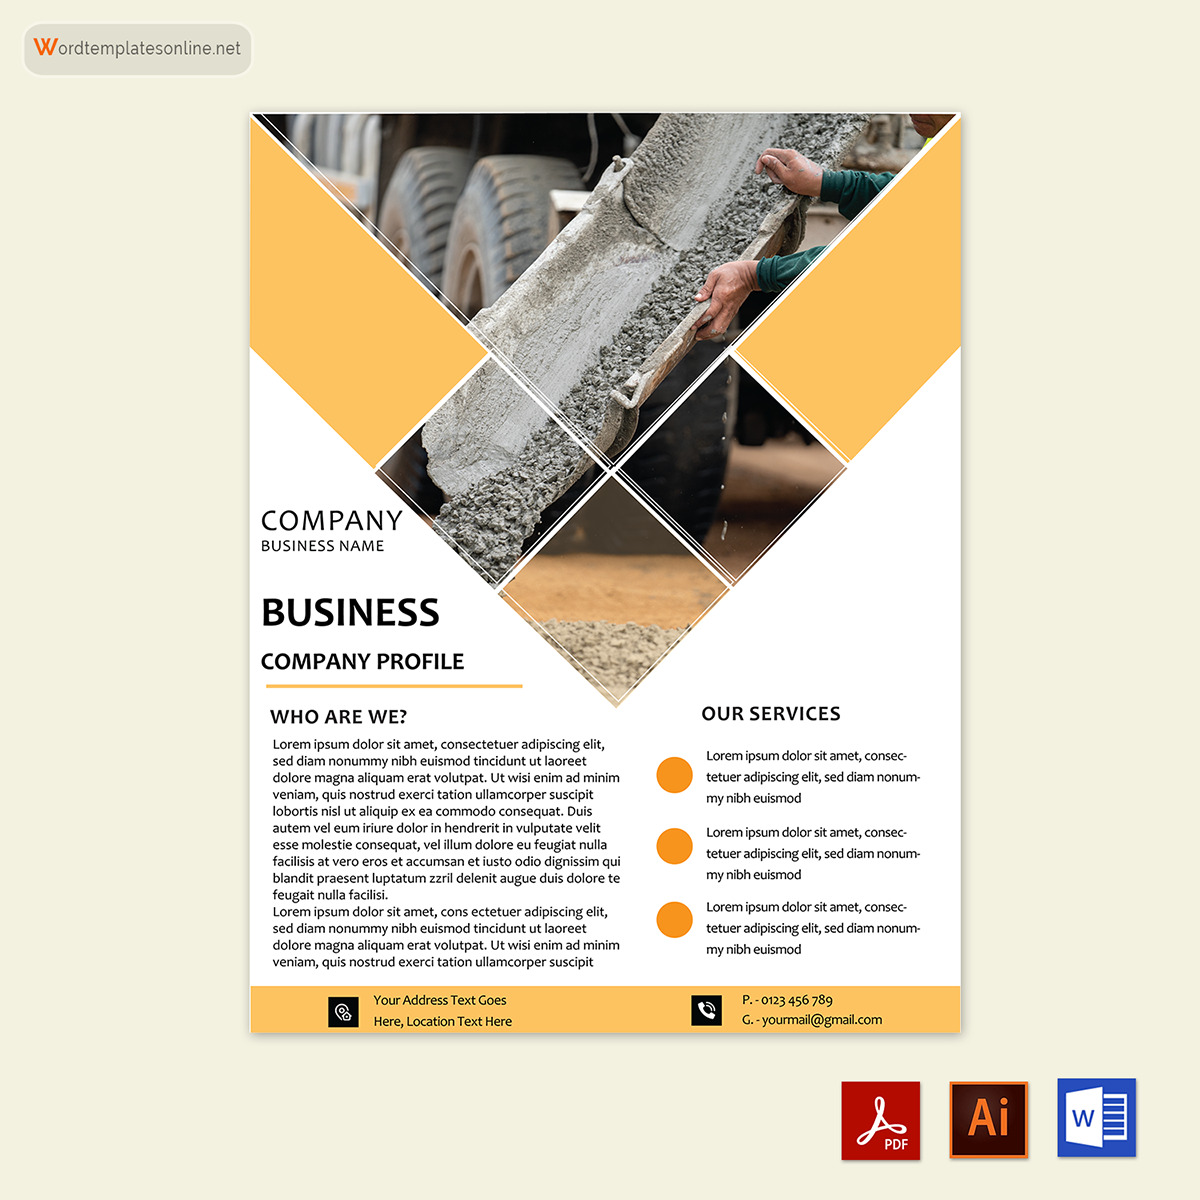 Free Company Profile Template - Download in Word, PDF, Adobe Illustrator 03